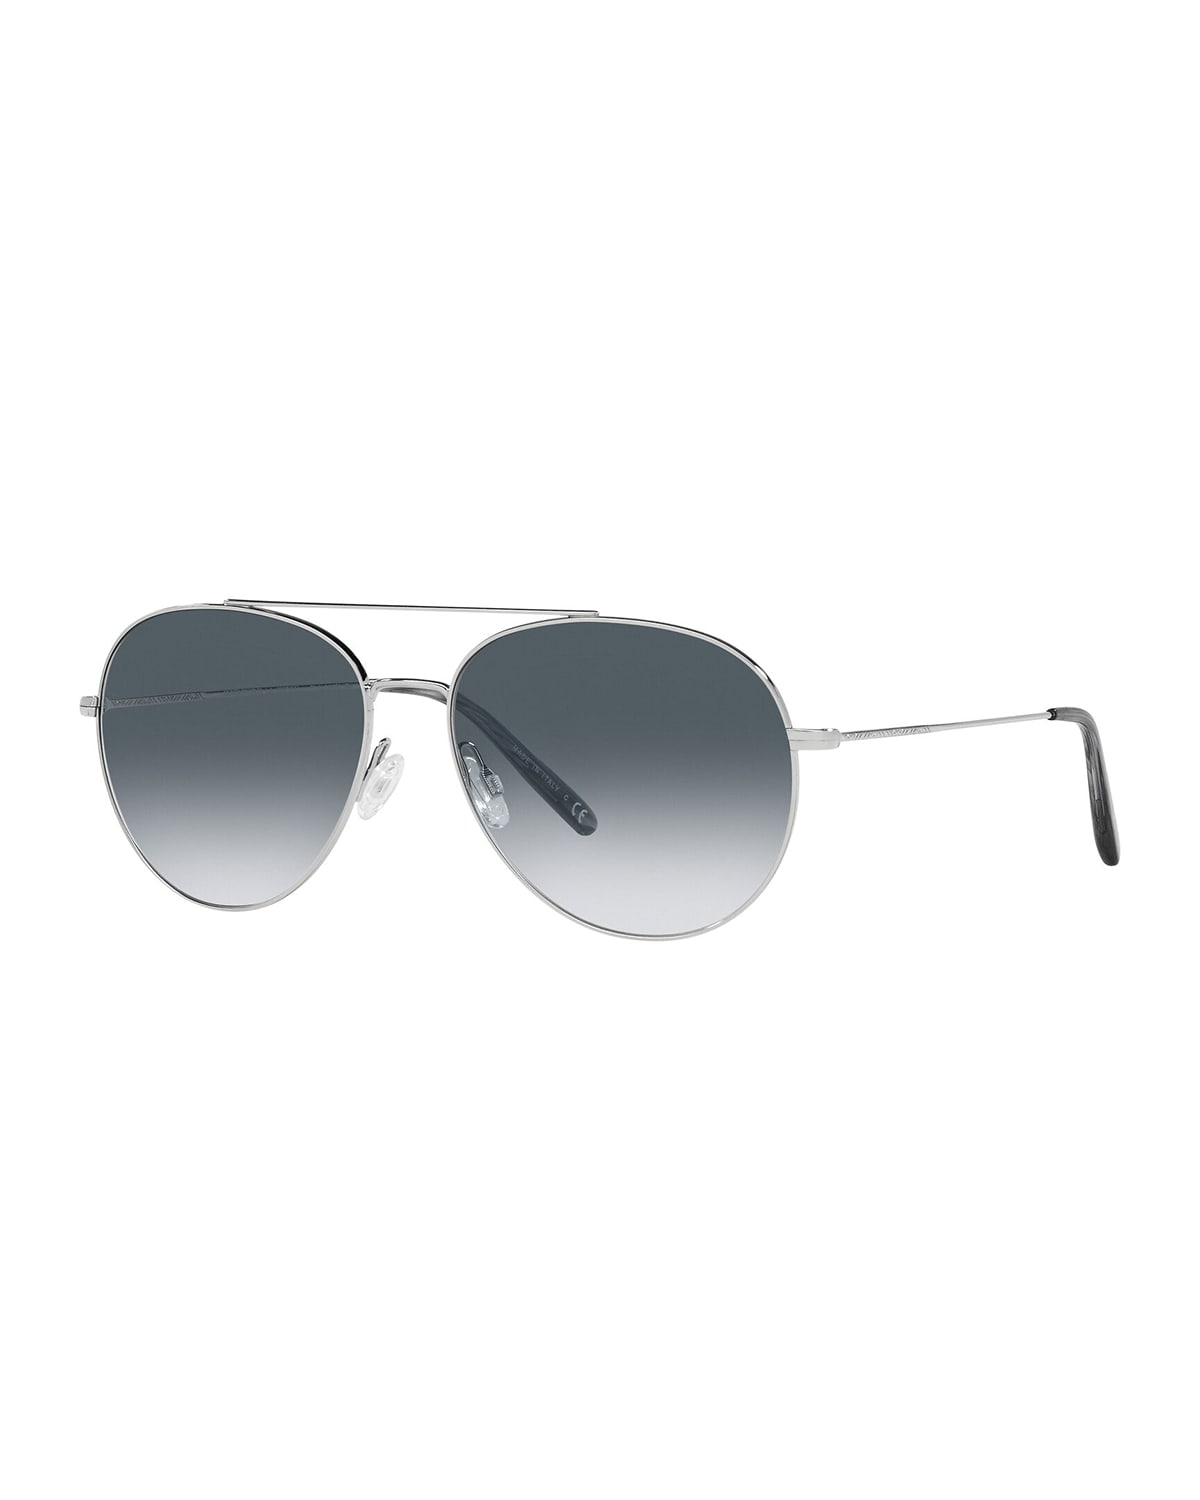 Airdale Metal Aviator Sunglasses, Silver | Neiman Marcus